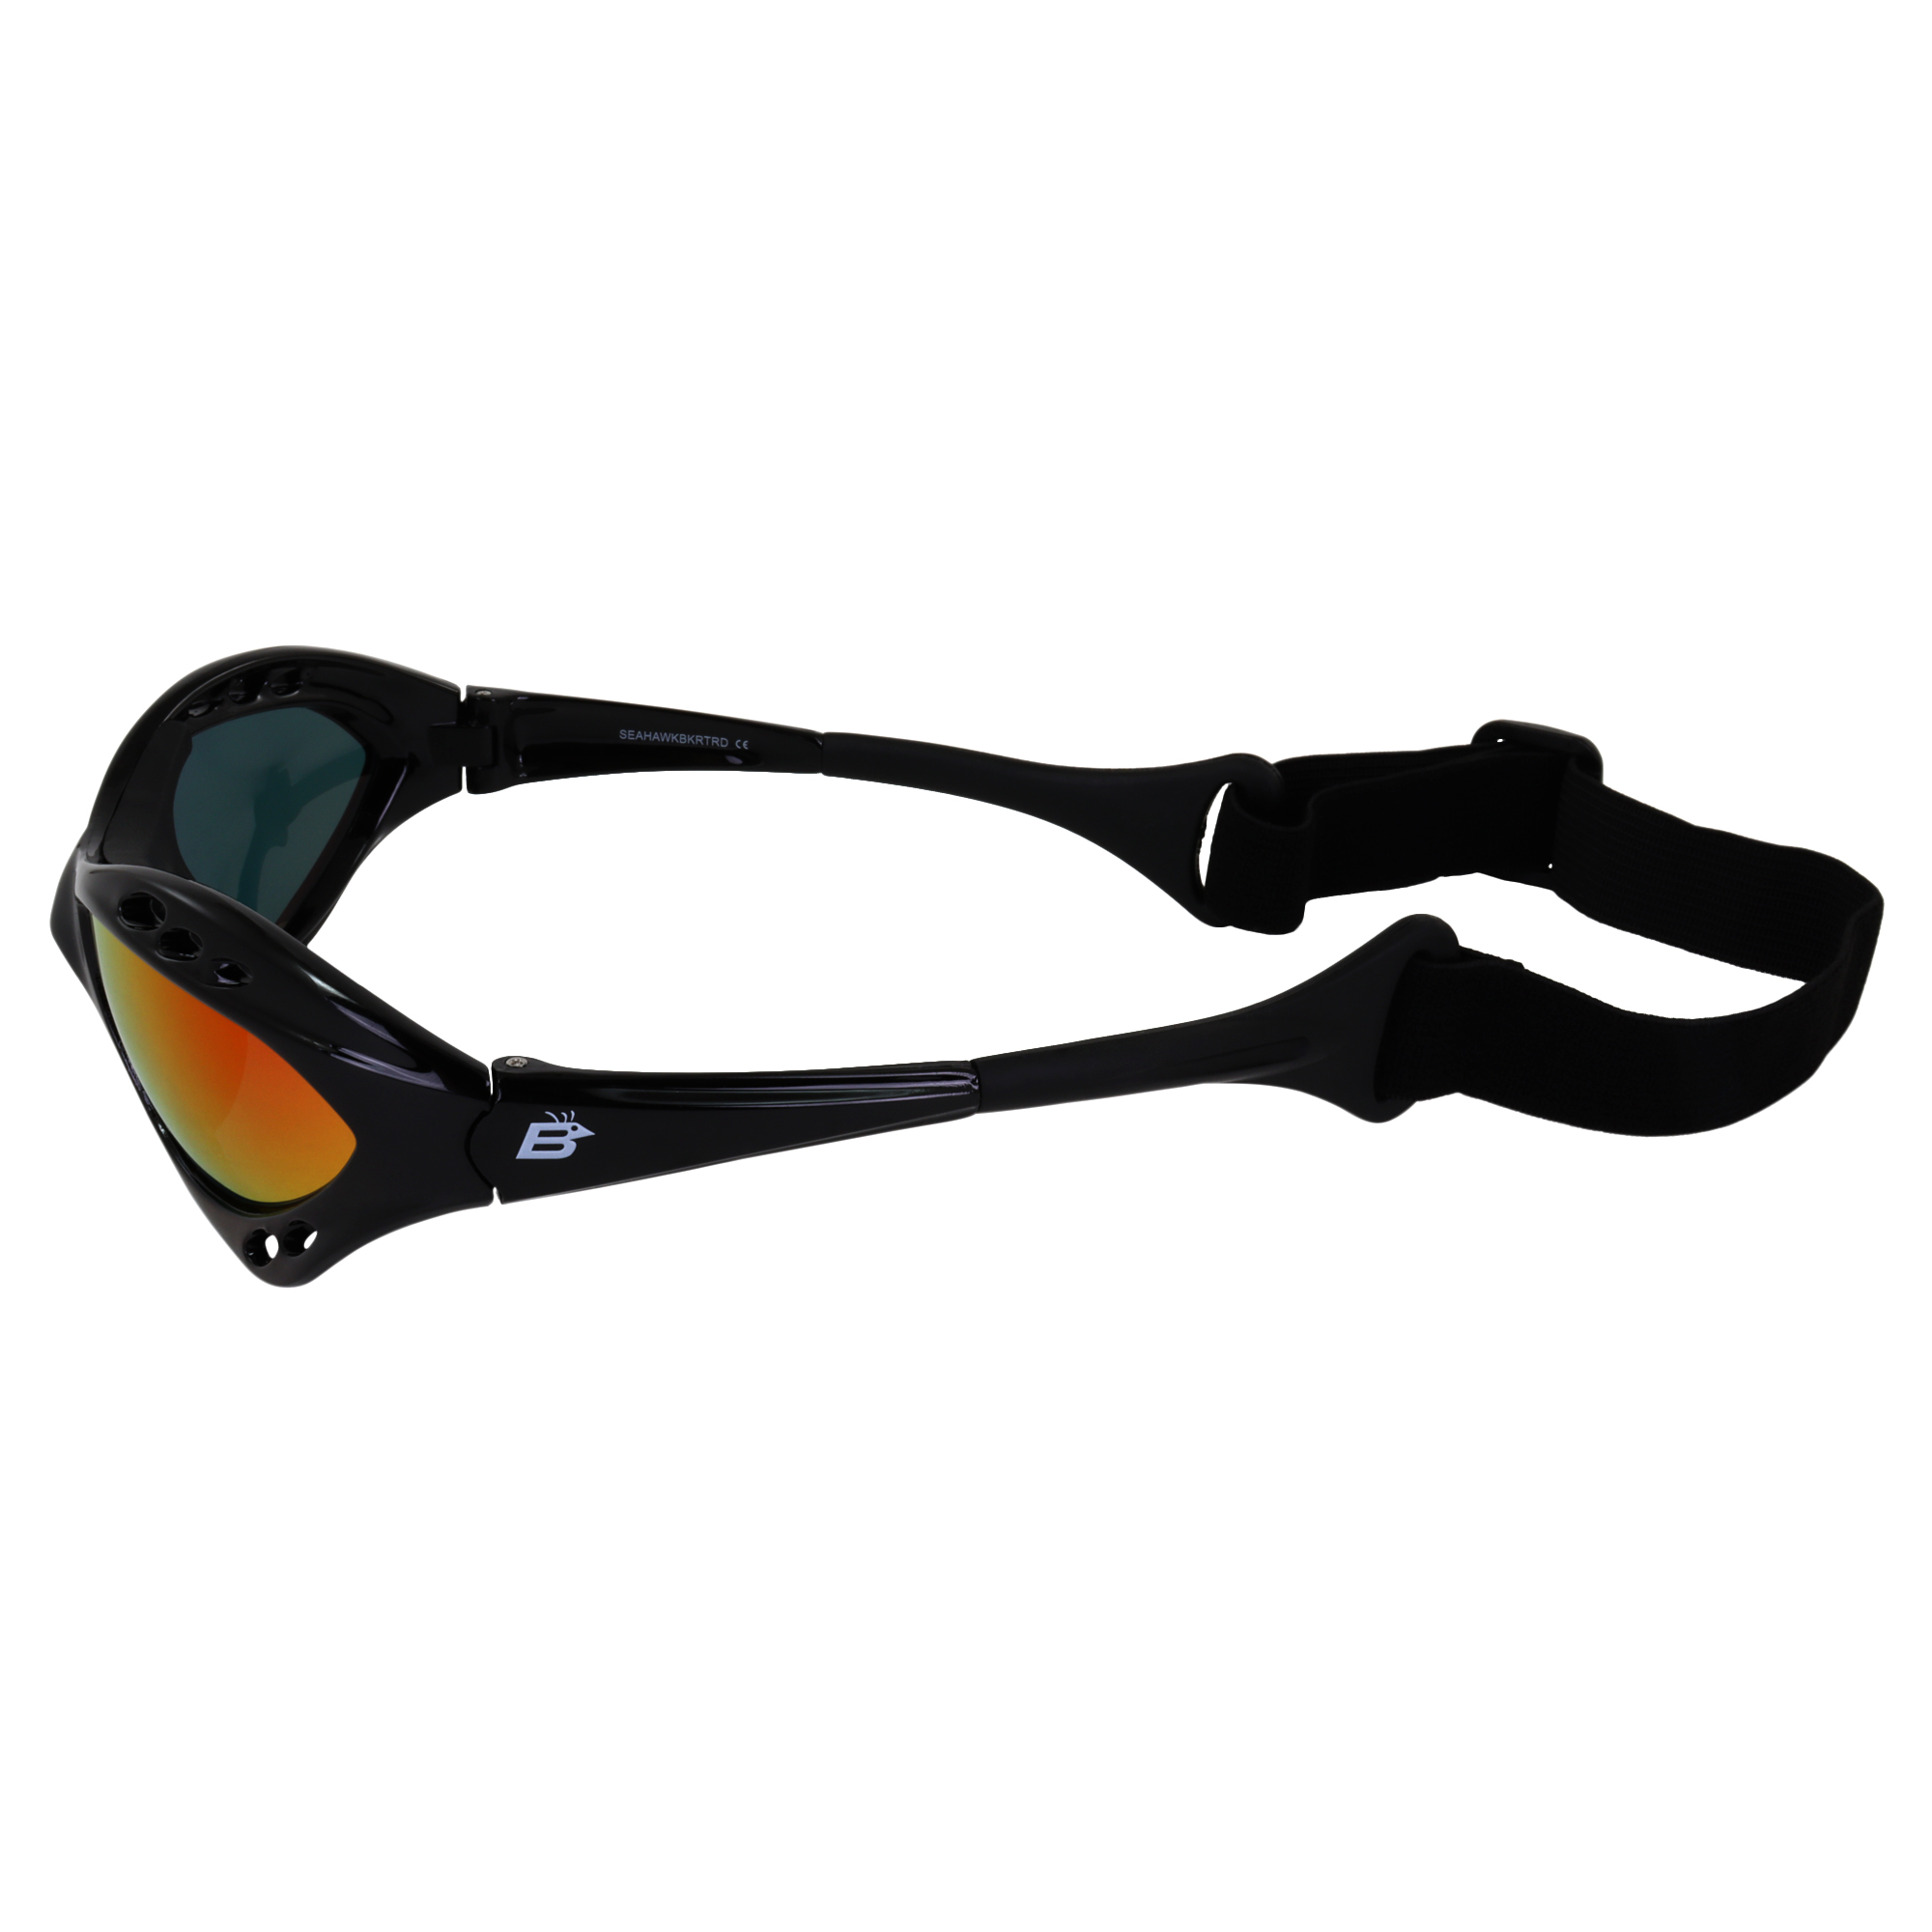 Birdz Seahawk Padded Polarized Sunglasses Jetski Kayaking Jet Ski Watersports w/ Built in Strap Black Frame and Polarized ReflecTech Red Mirror Lens - image 4 of 6